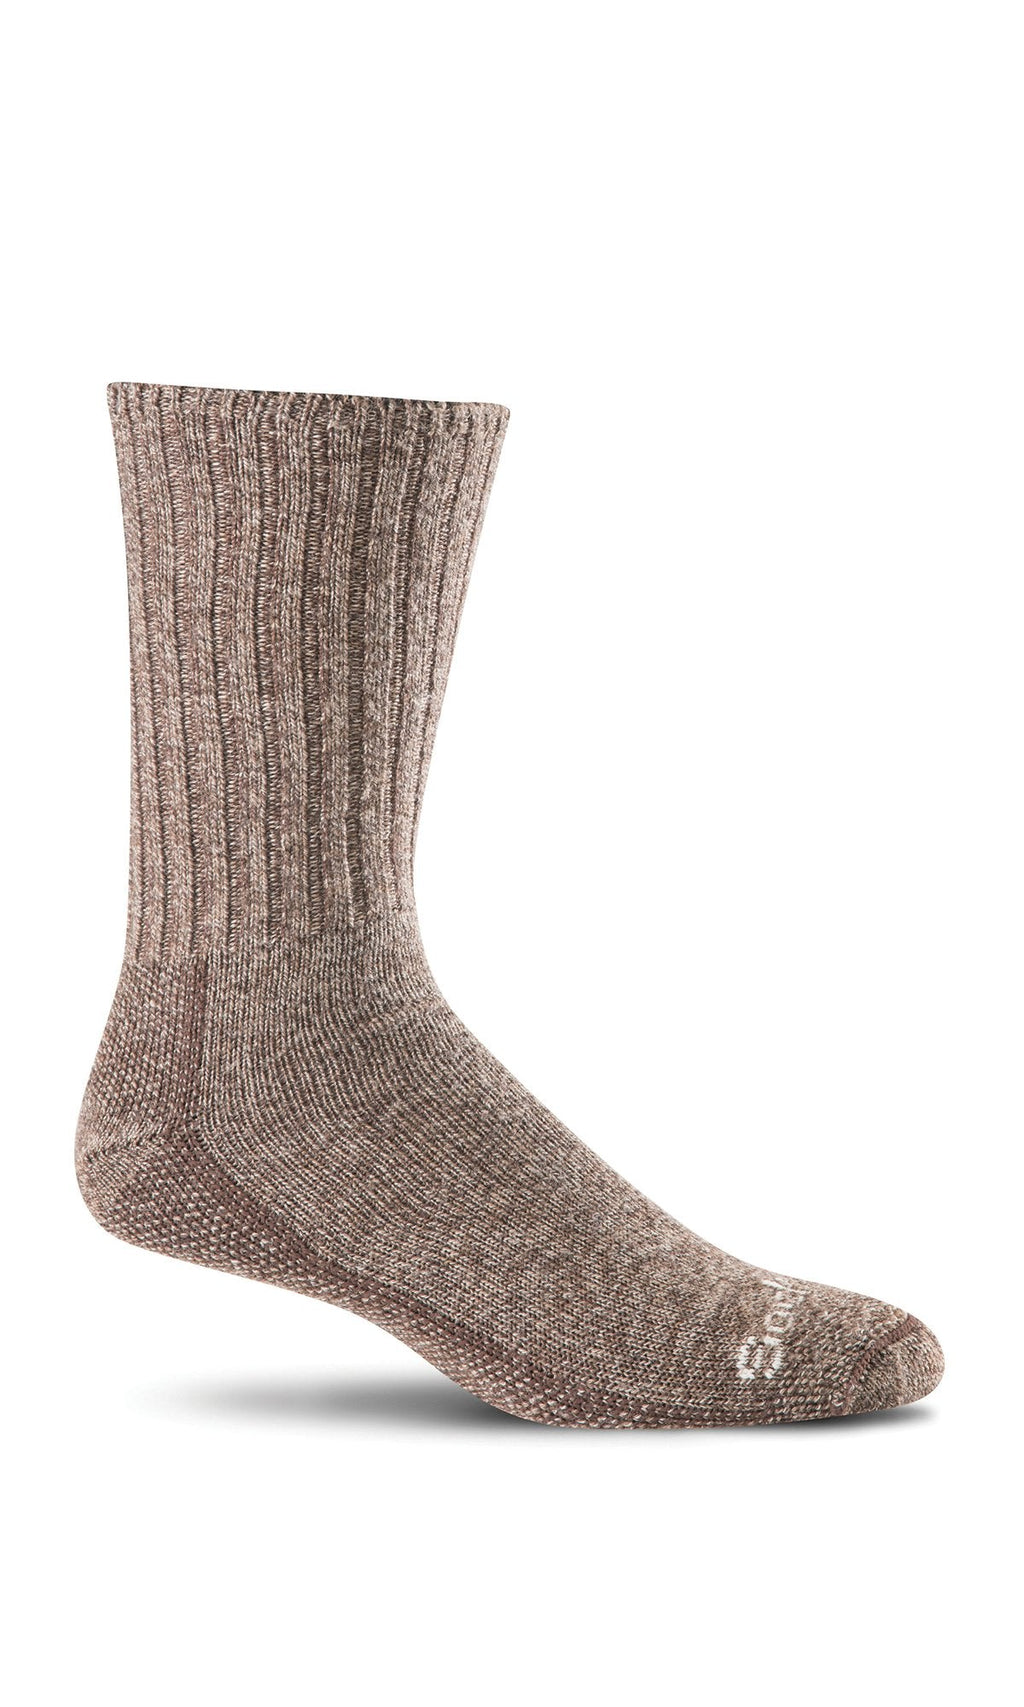 Men's Big Easy | Relaxed Fit Socks - Merino Wool Relaxed Fit/Diabetic Friendly - Sockwell